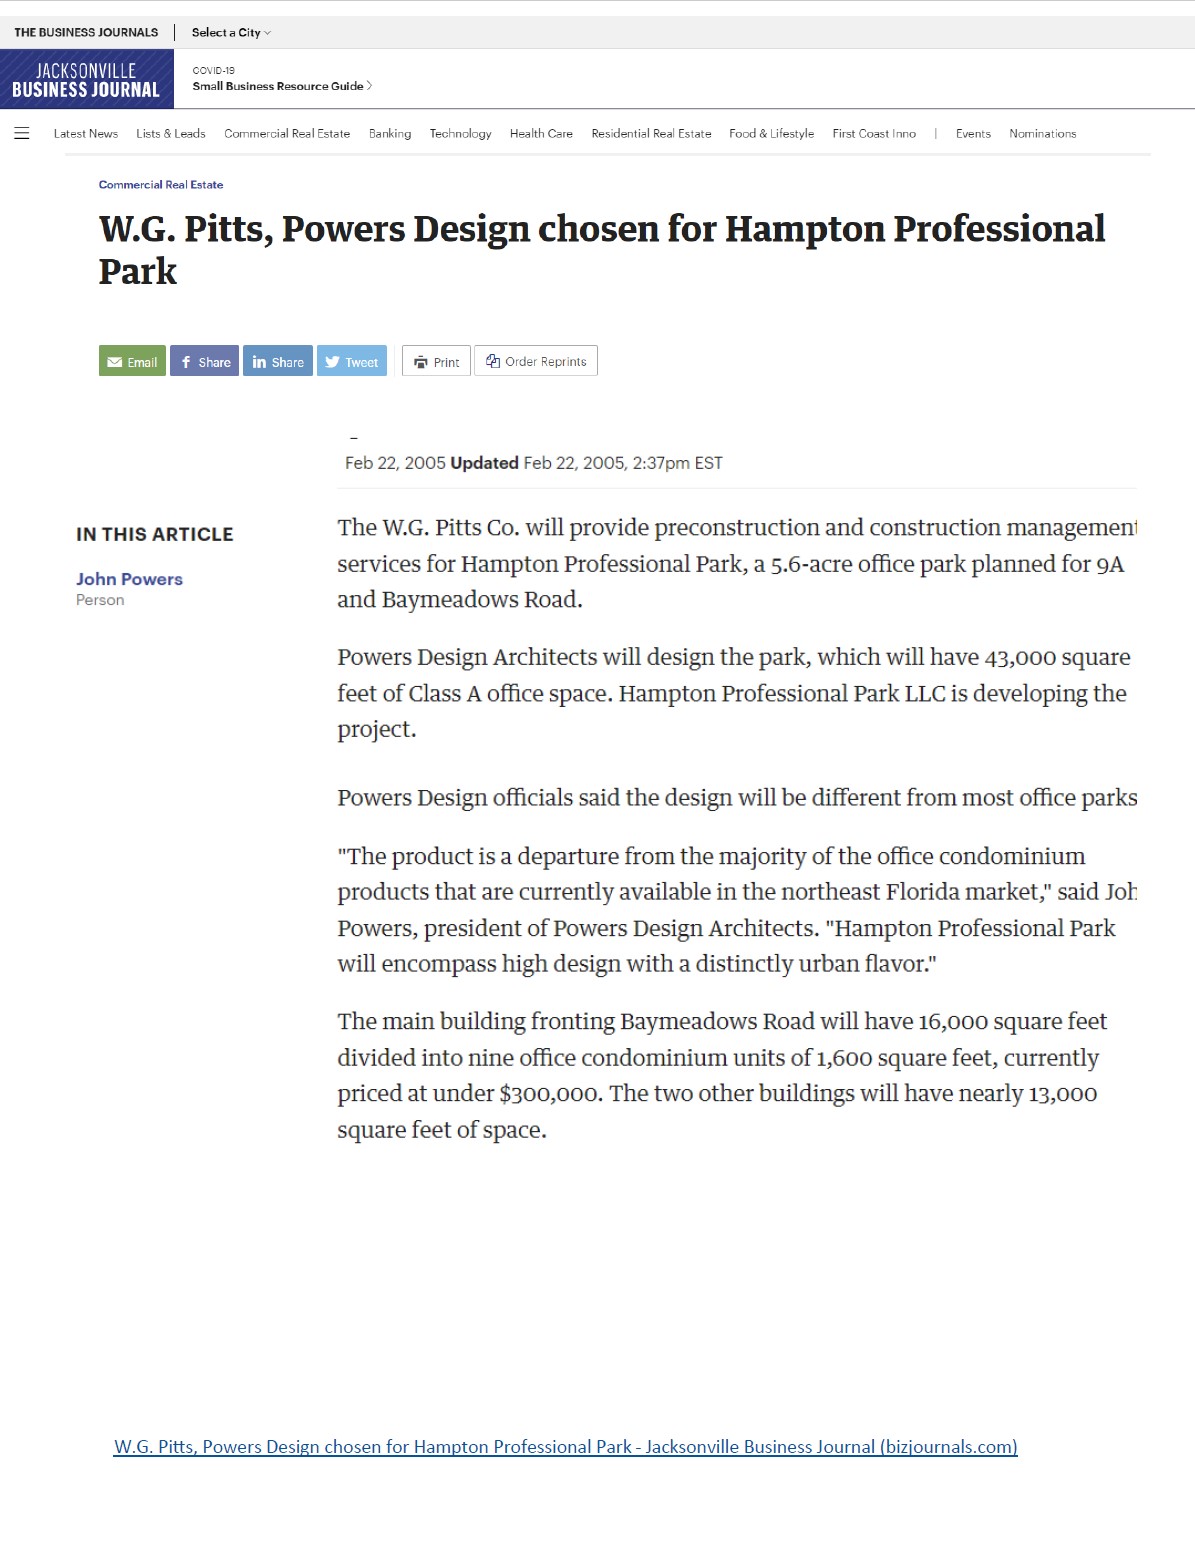 WGPITTS Powers Design Chosen for Hampton Professional Park